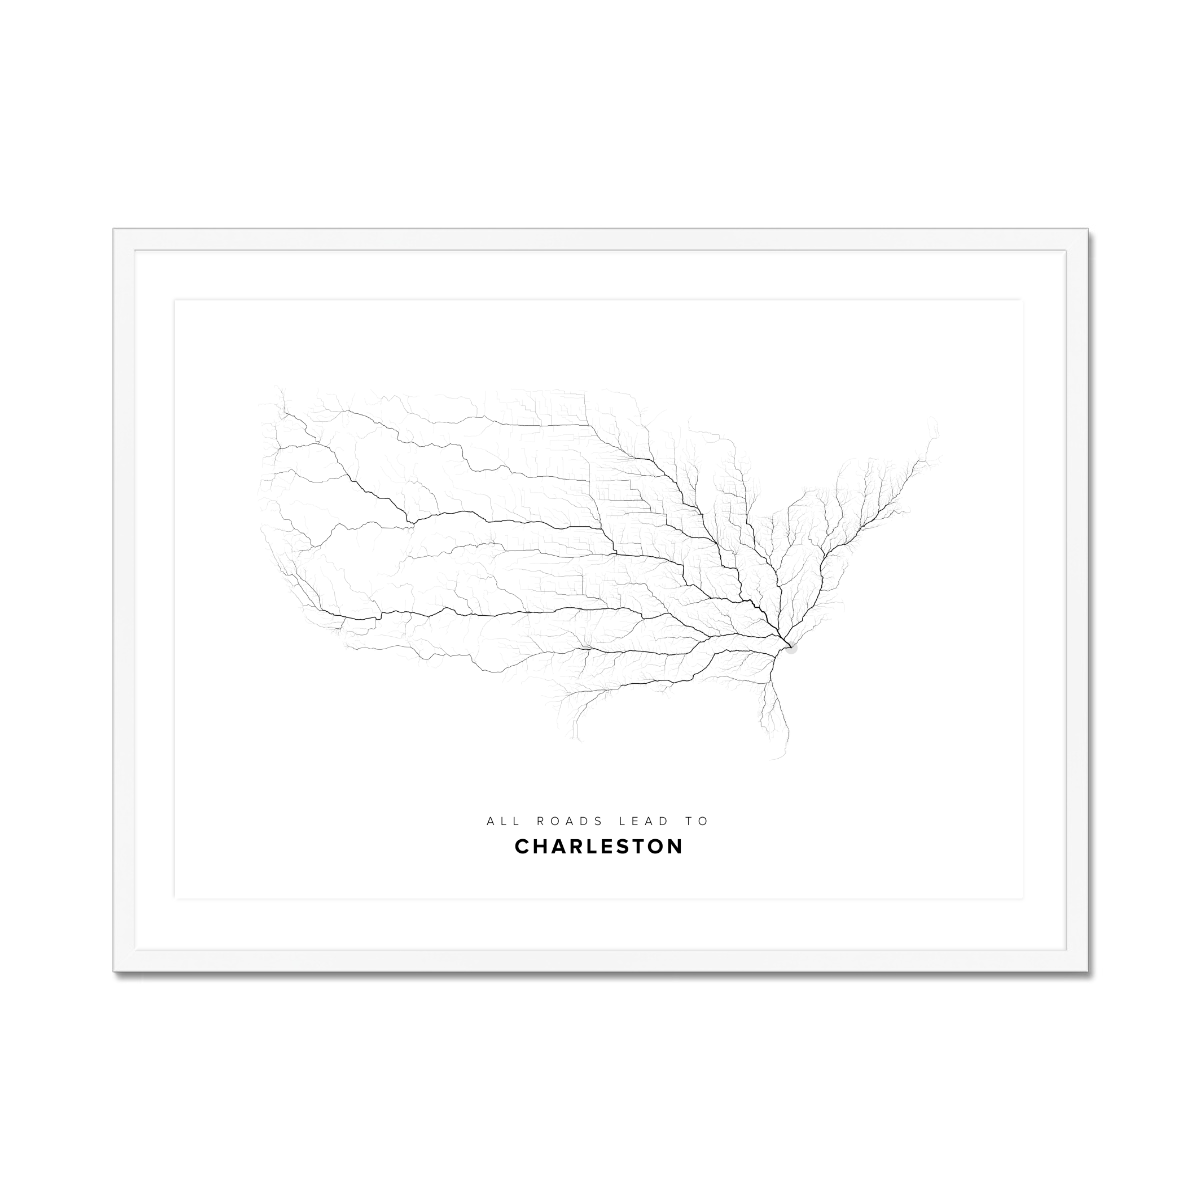 All roads lead to Charleston (United States of America) Fine Art Map Print